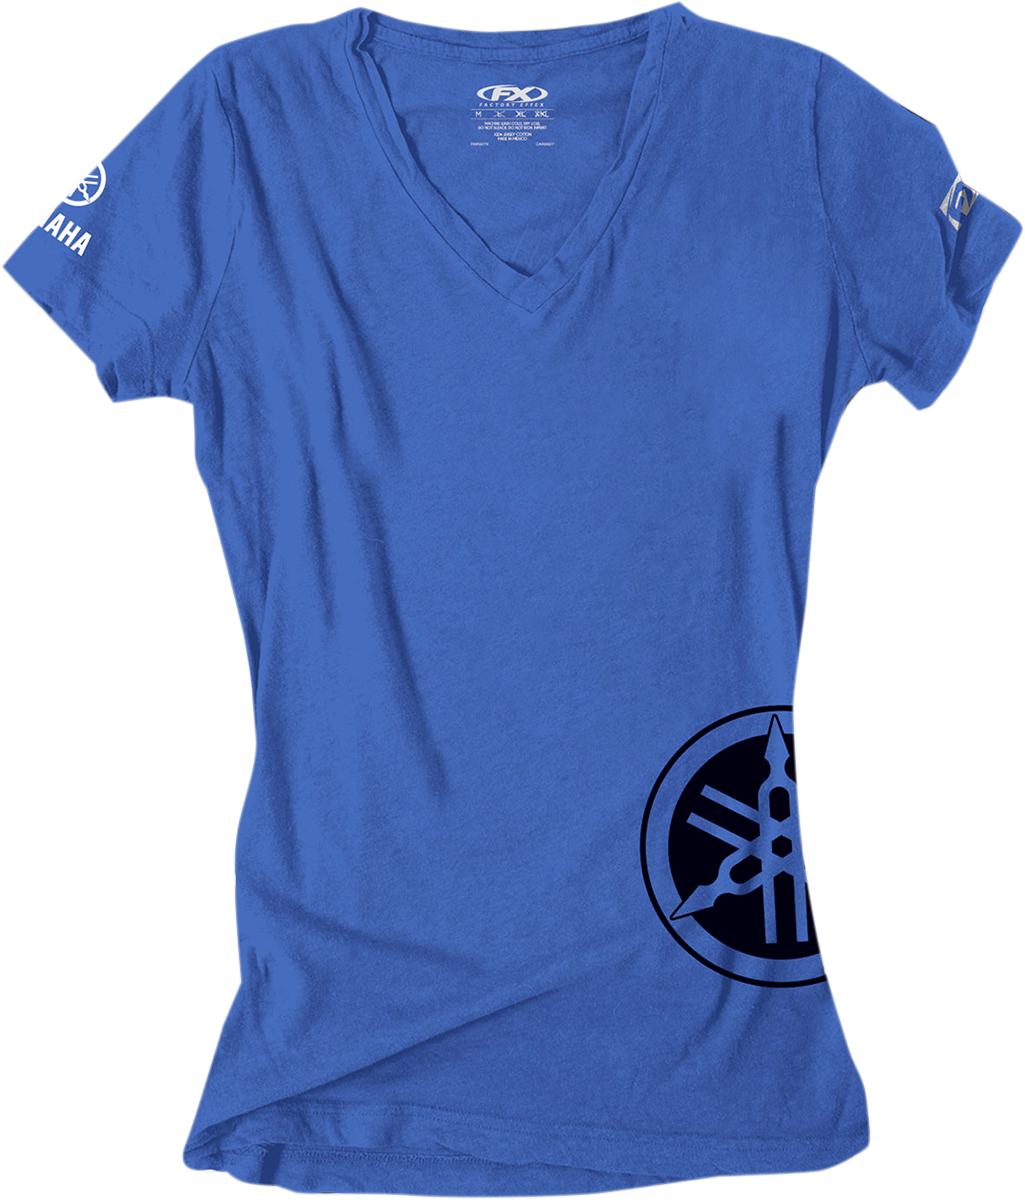 FACTORY EFFEX Camiseta Yamaha para mujer - Azul real - Mediana 17-87242 